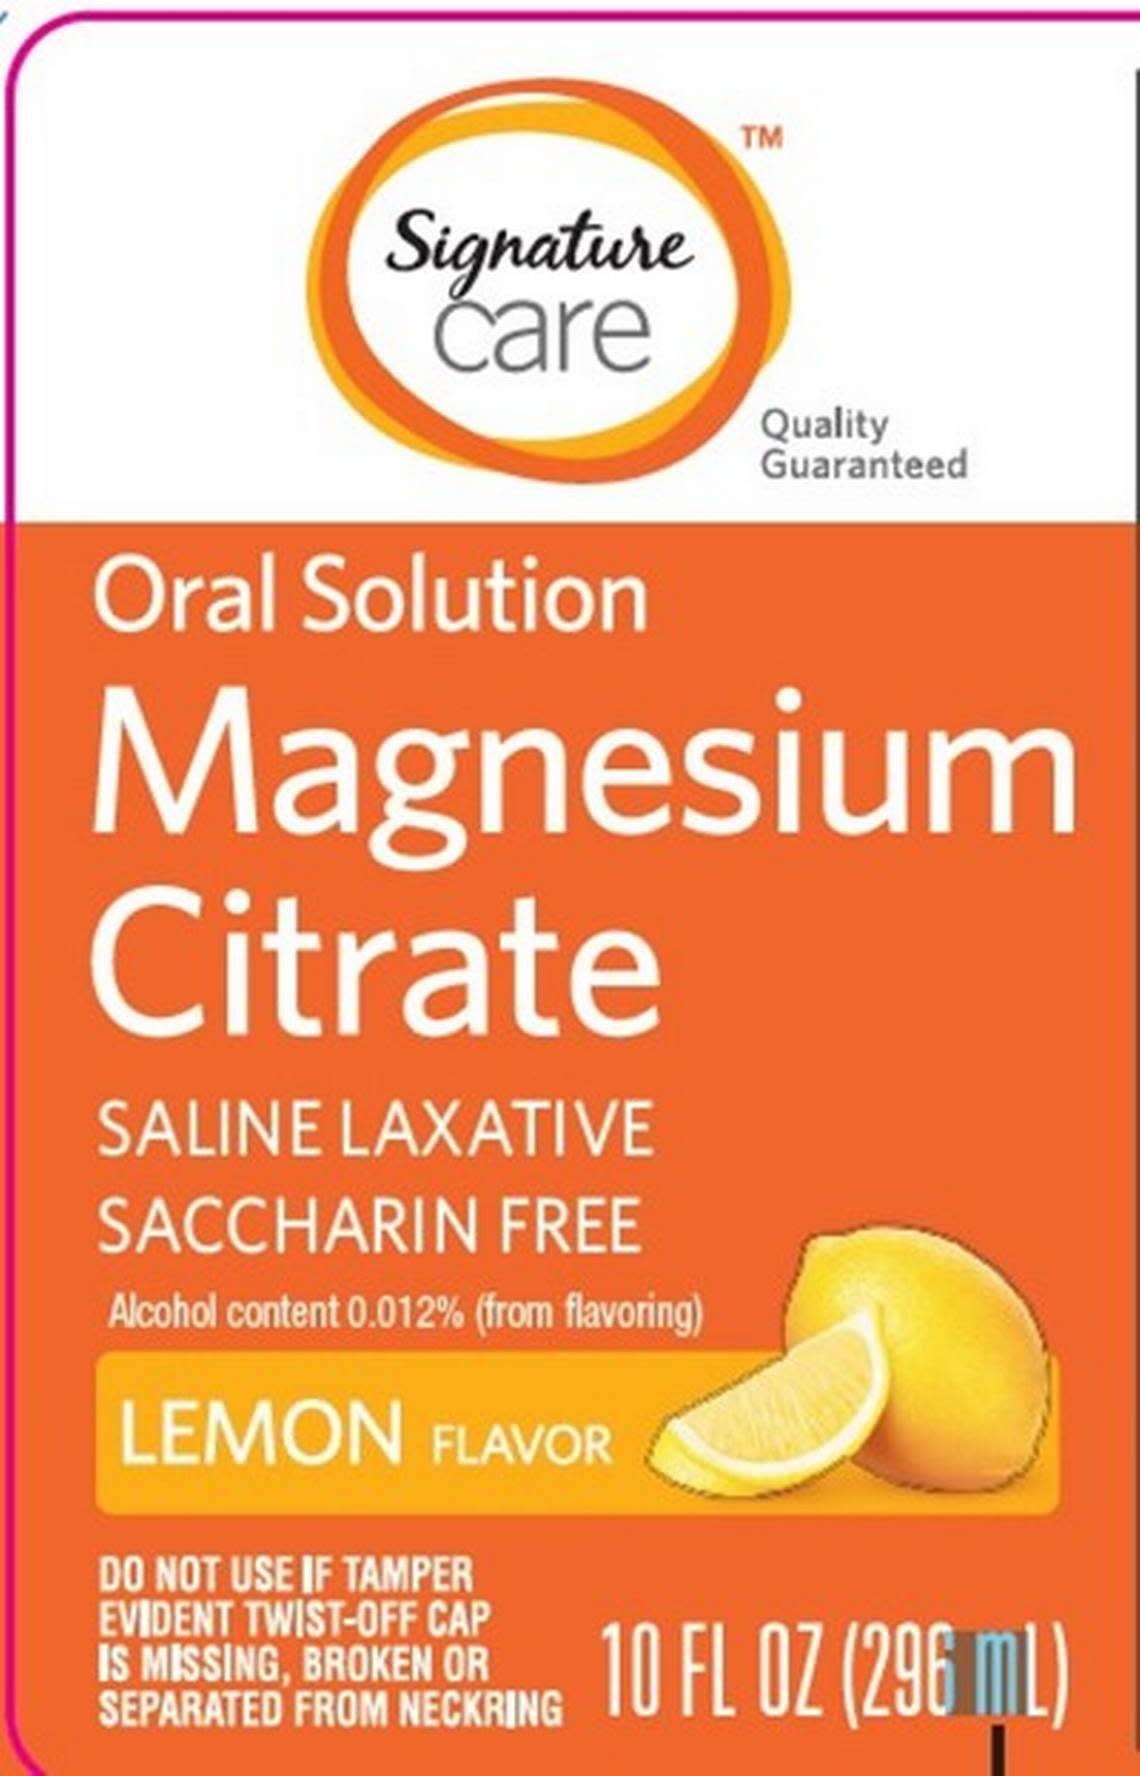 Signature Care Magnesium Citrate Saline Laxative Lemon Flavor